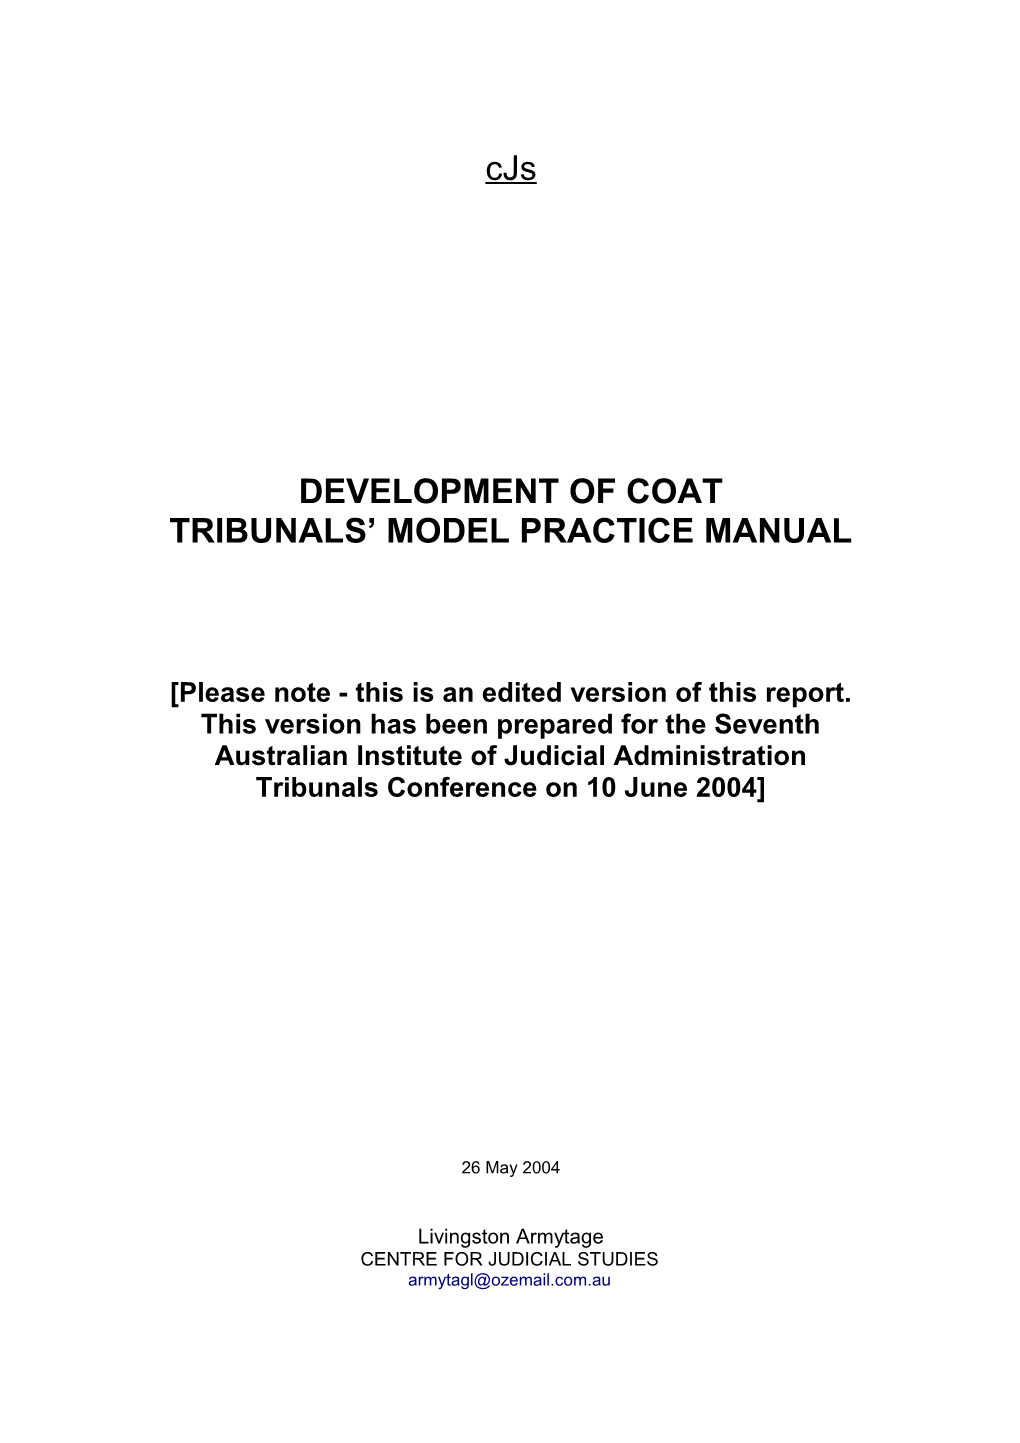 Development of COAT Tribunals' Model Practice Manual